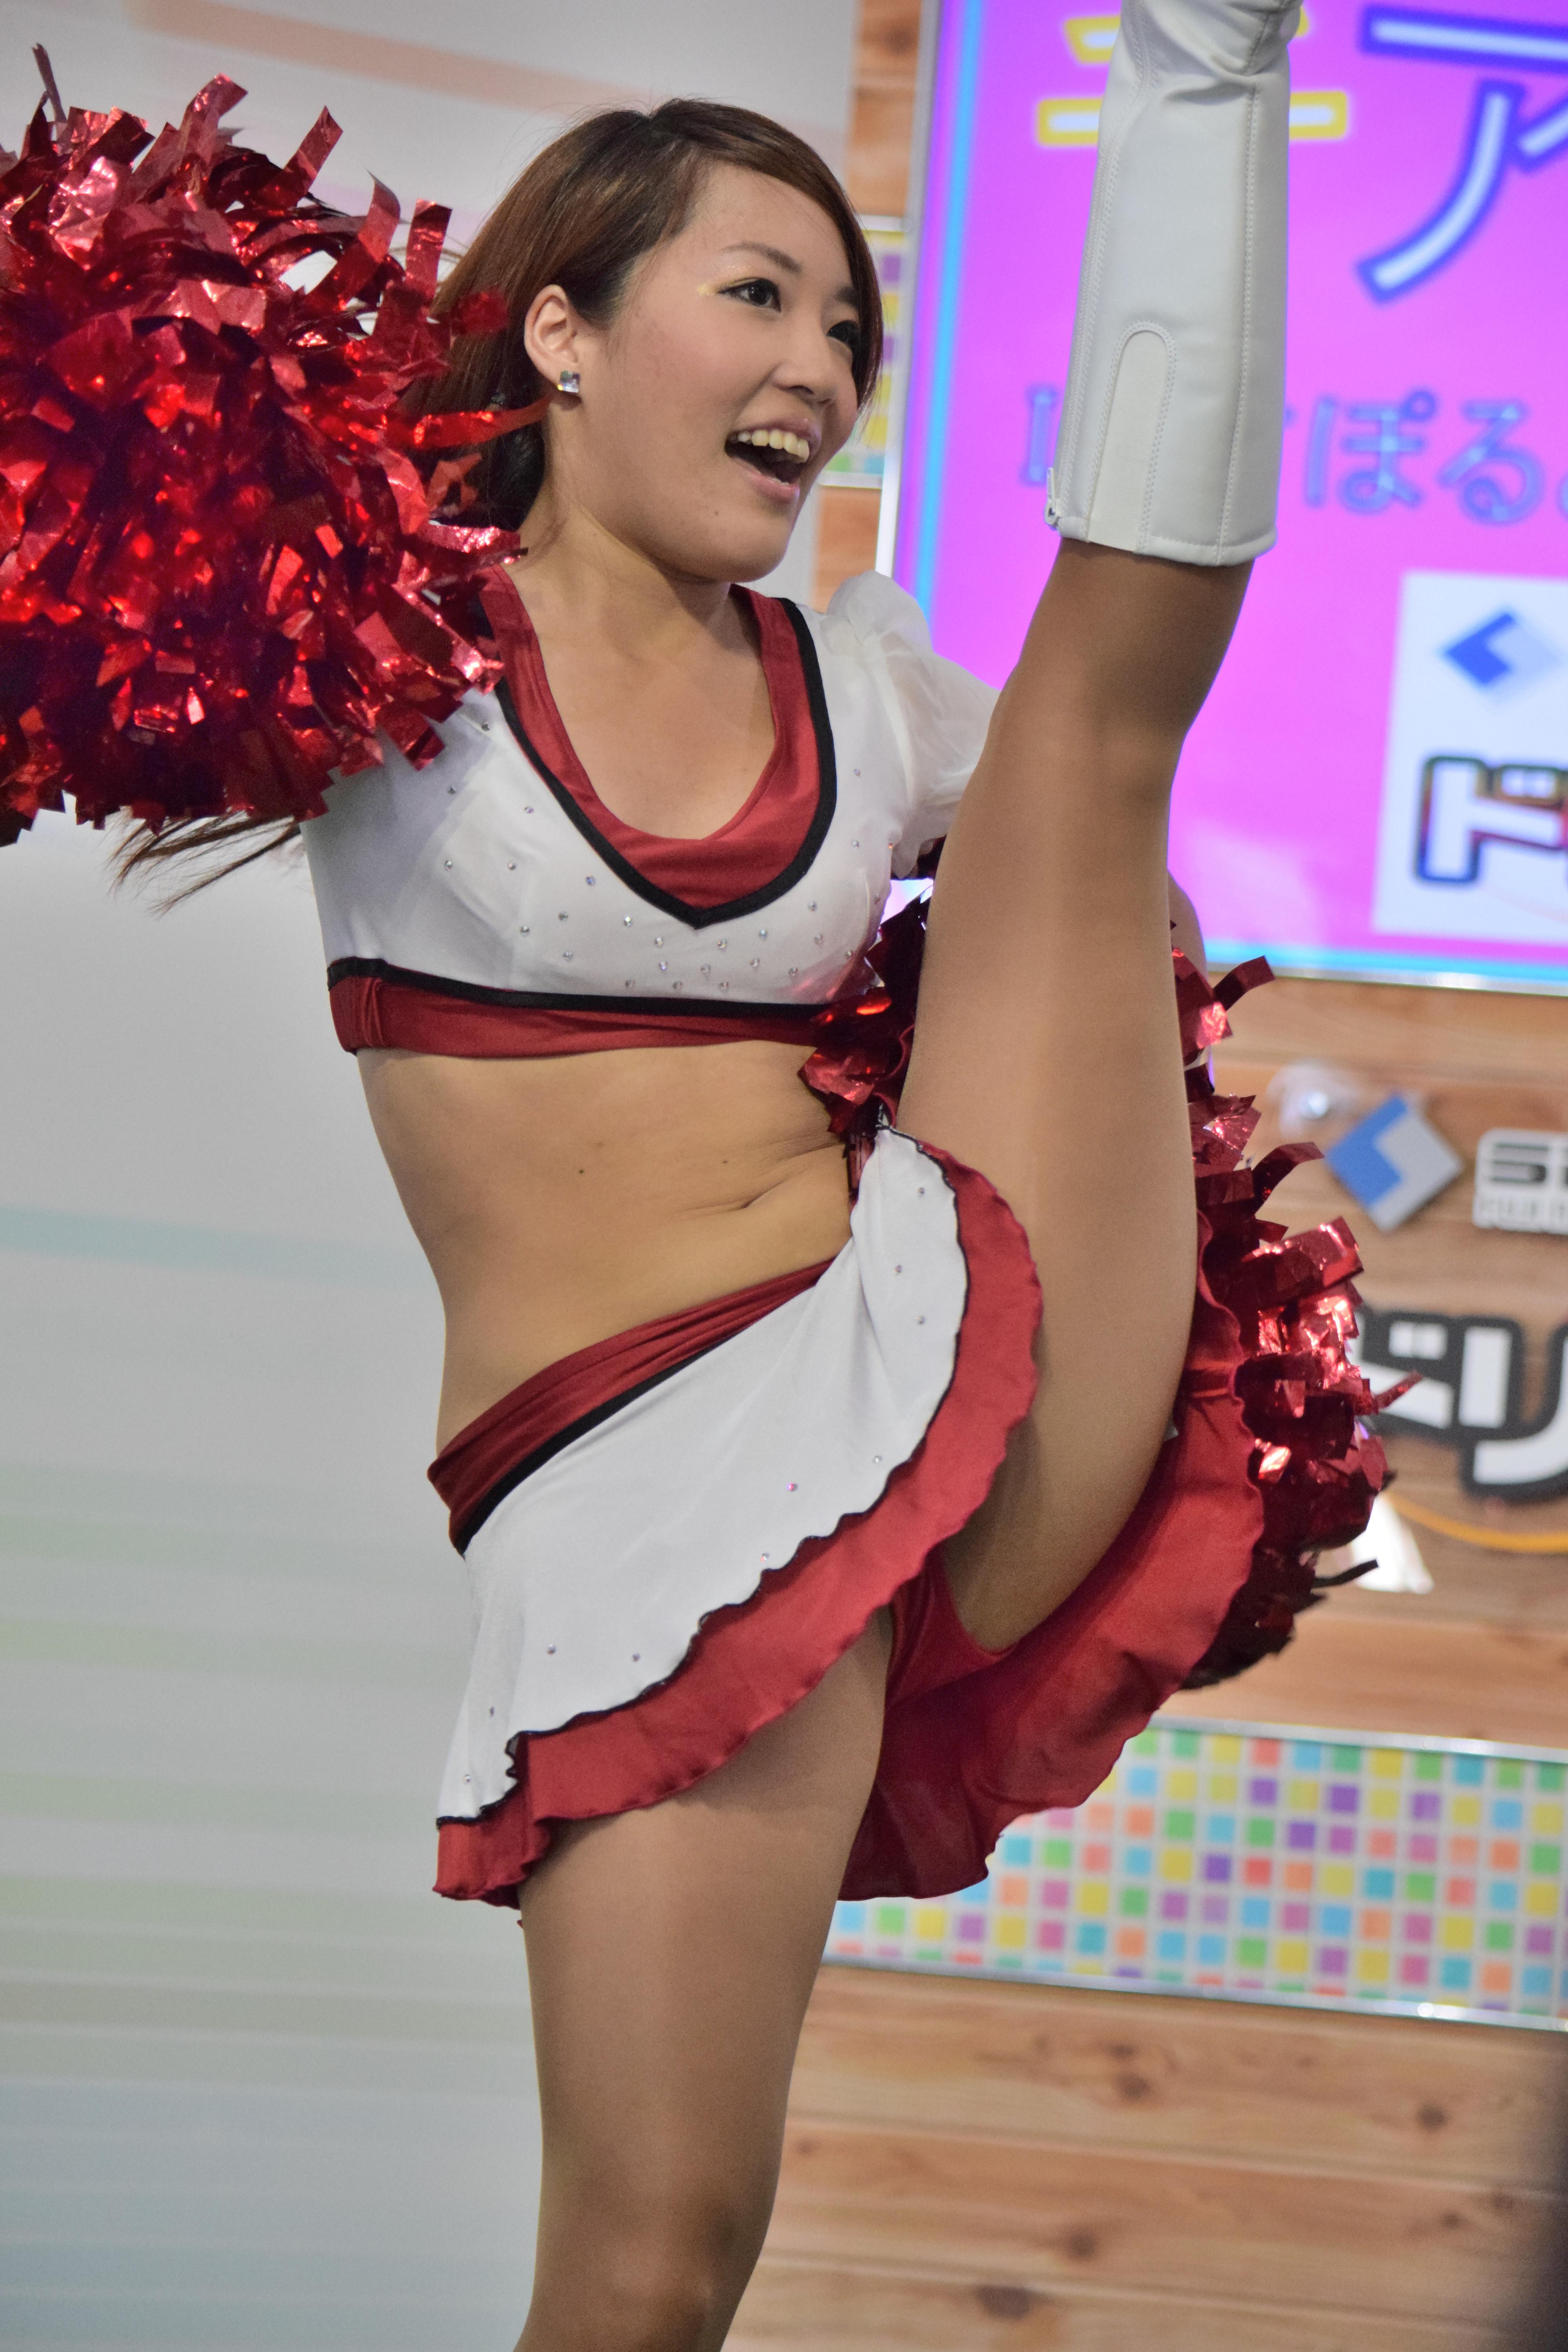 Gcolle_Cheer_73 K image! Sexy cheerleader